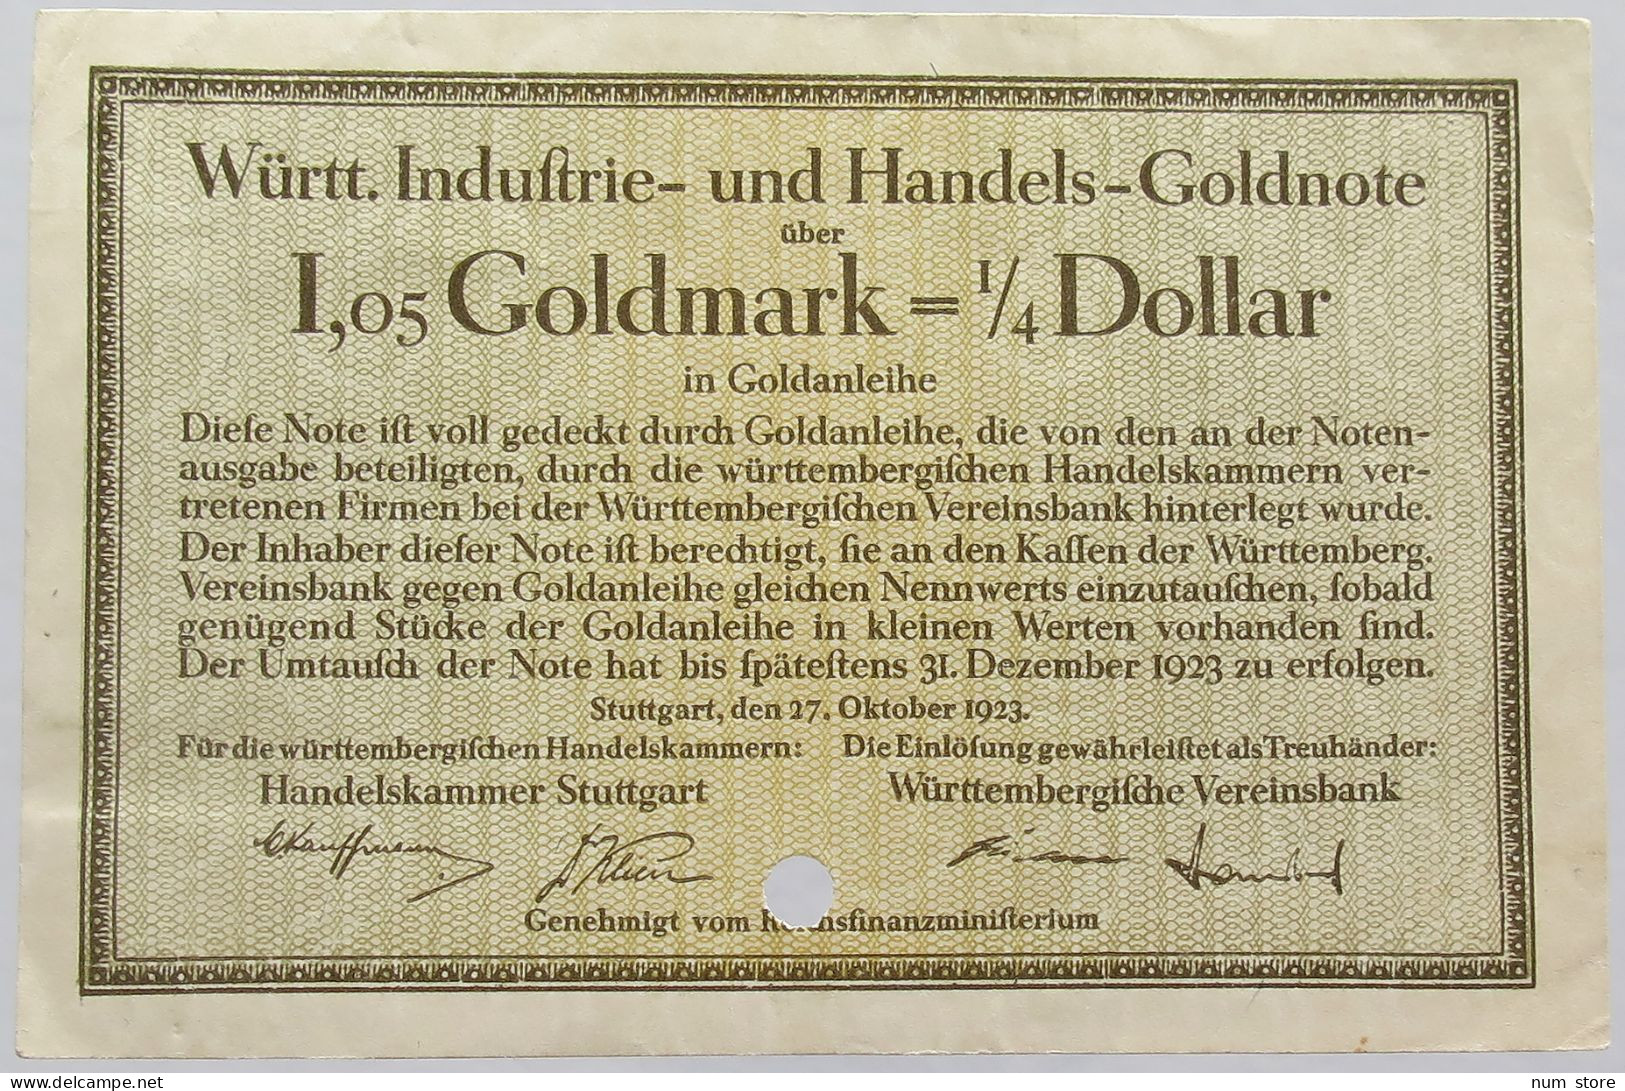 GERMANY 1/4 DOLLAR 1923 1.05 GOLDMARK #alb002 0187 - Deutsche Golddiskontbank